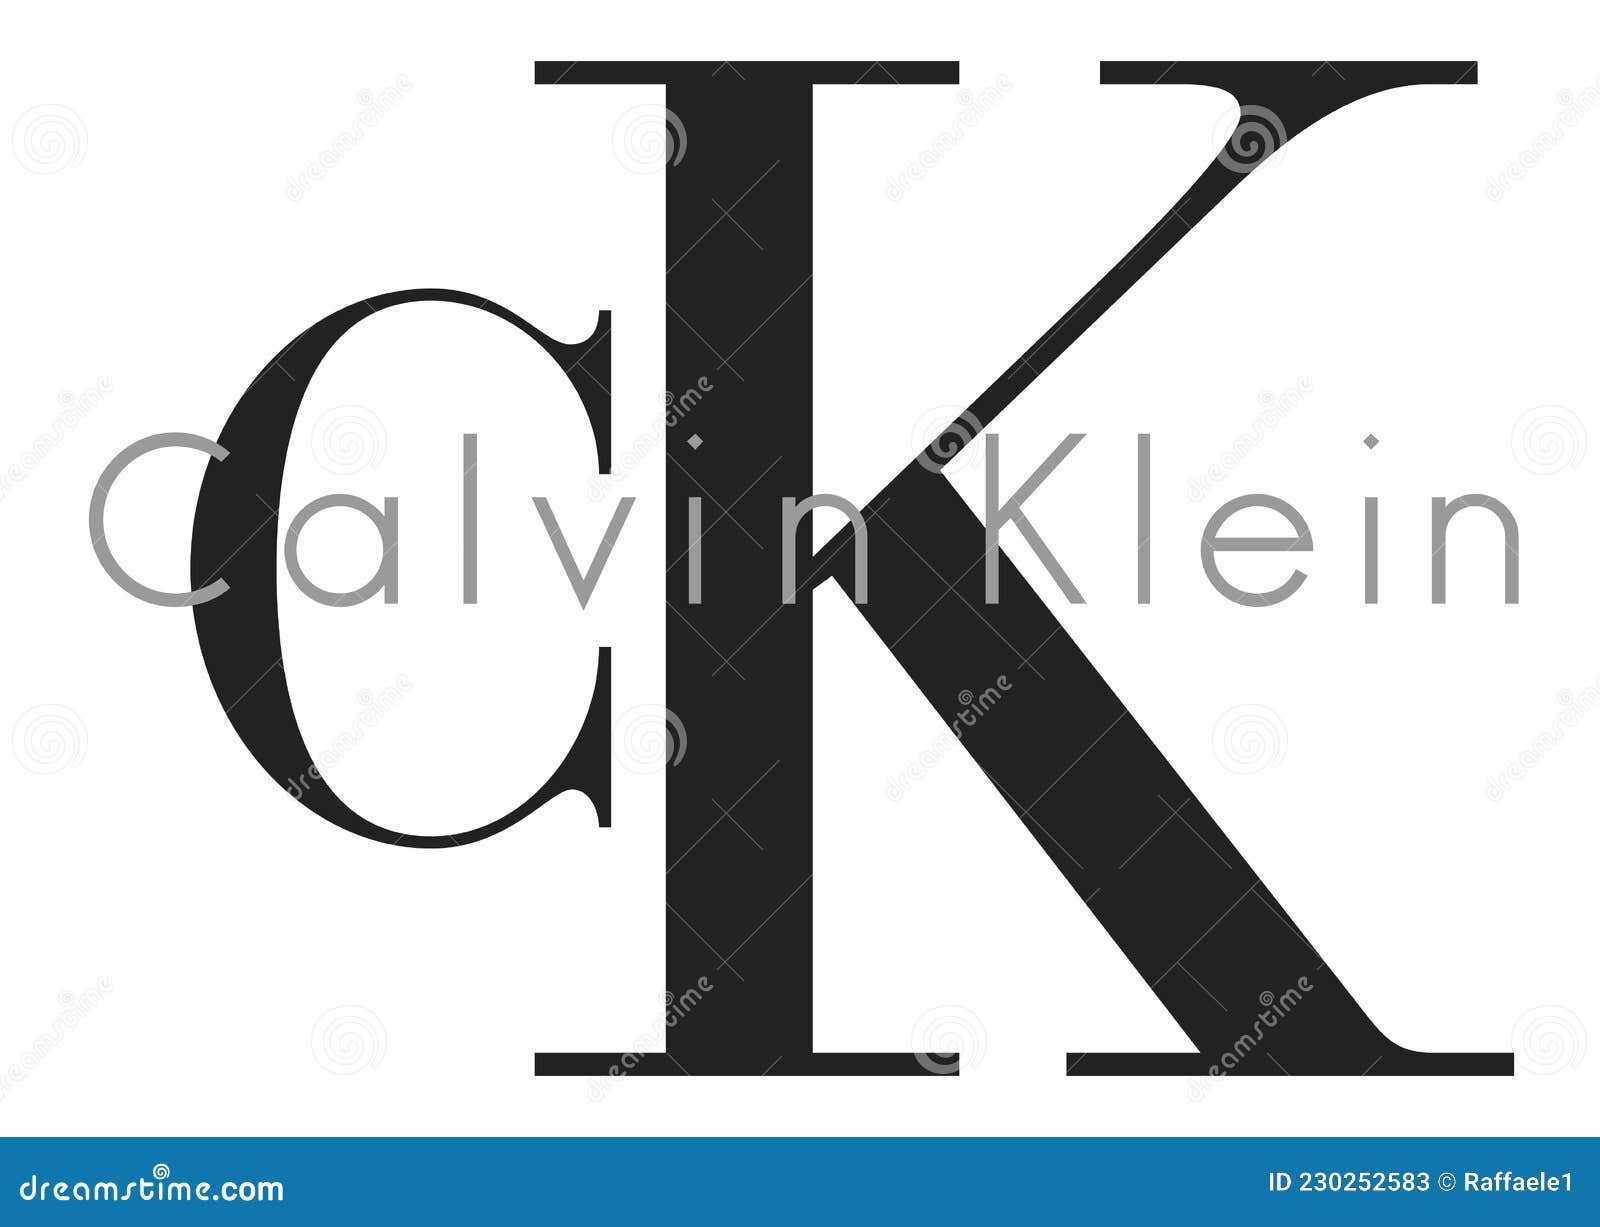 Calvin Klein Stock Illustrations – 27 Calvin Klein Stock Illustrations,  Vectors & Clipart - Dreamstime